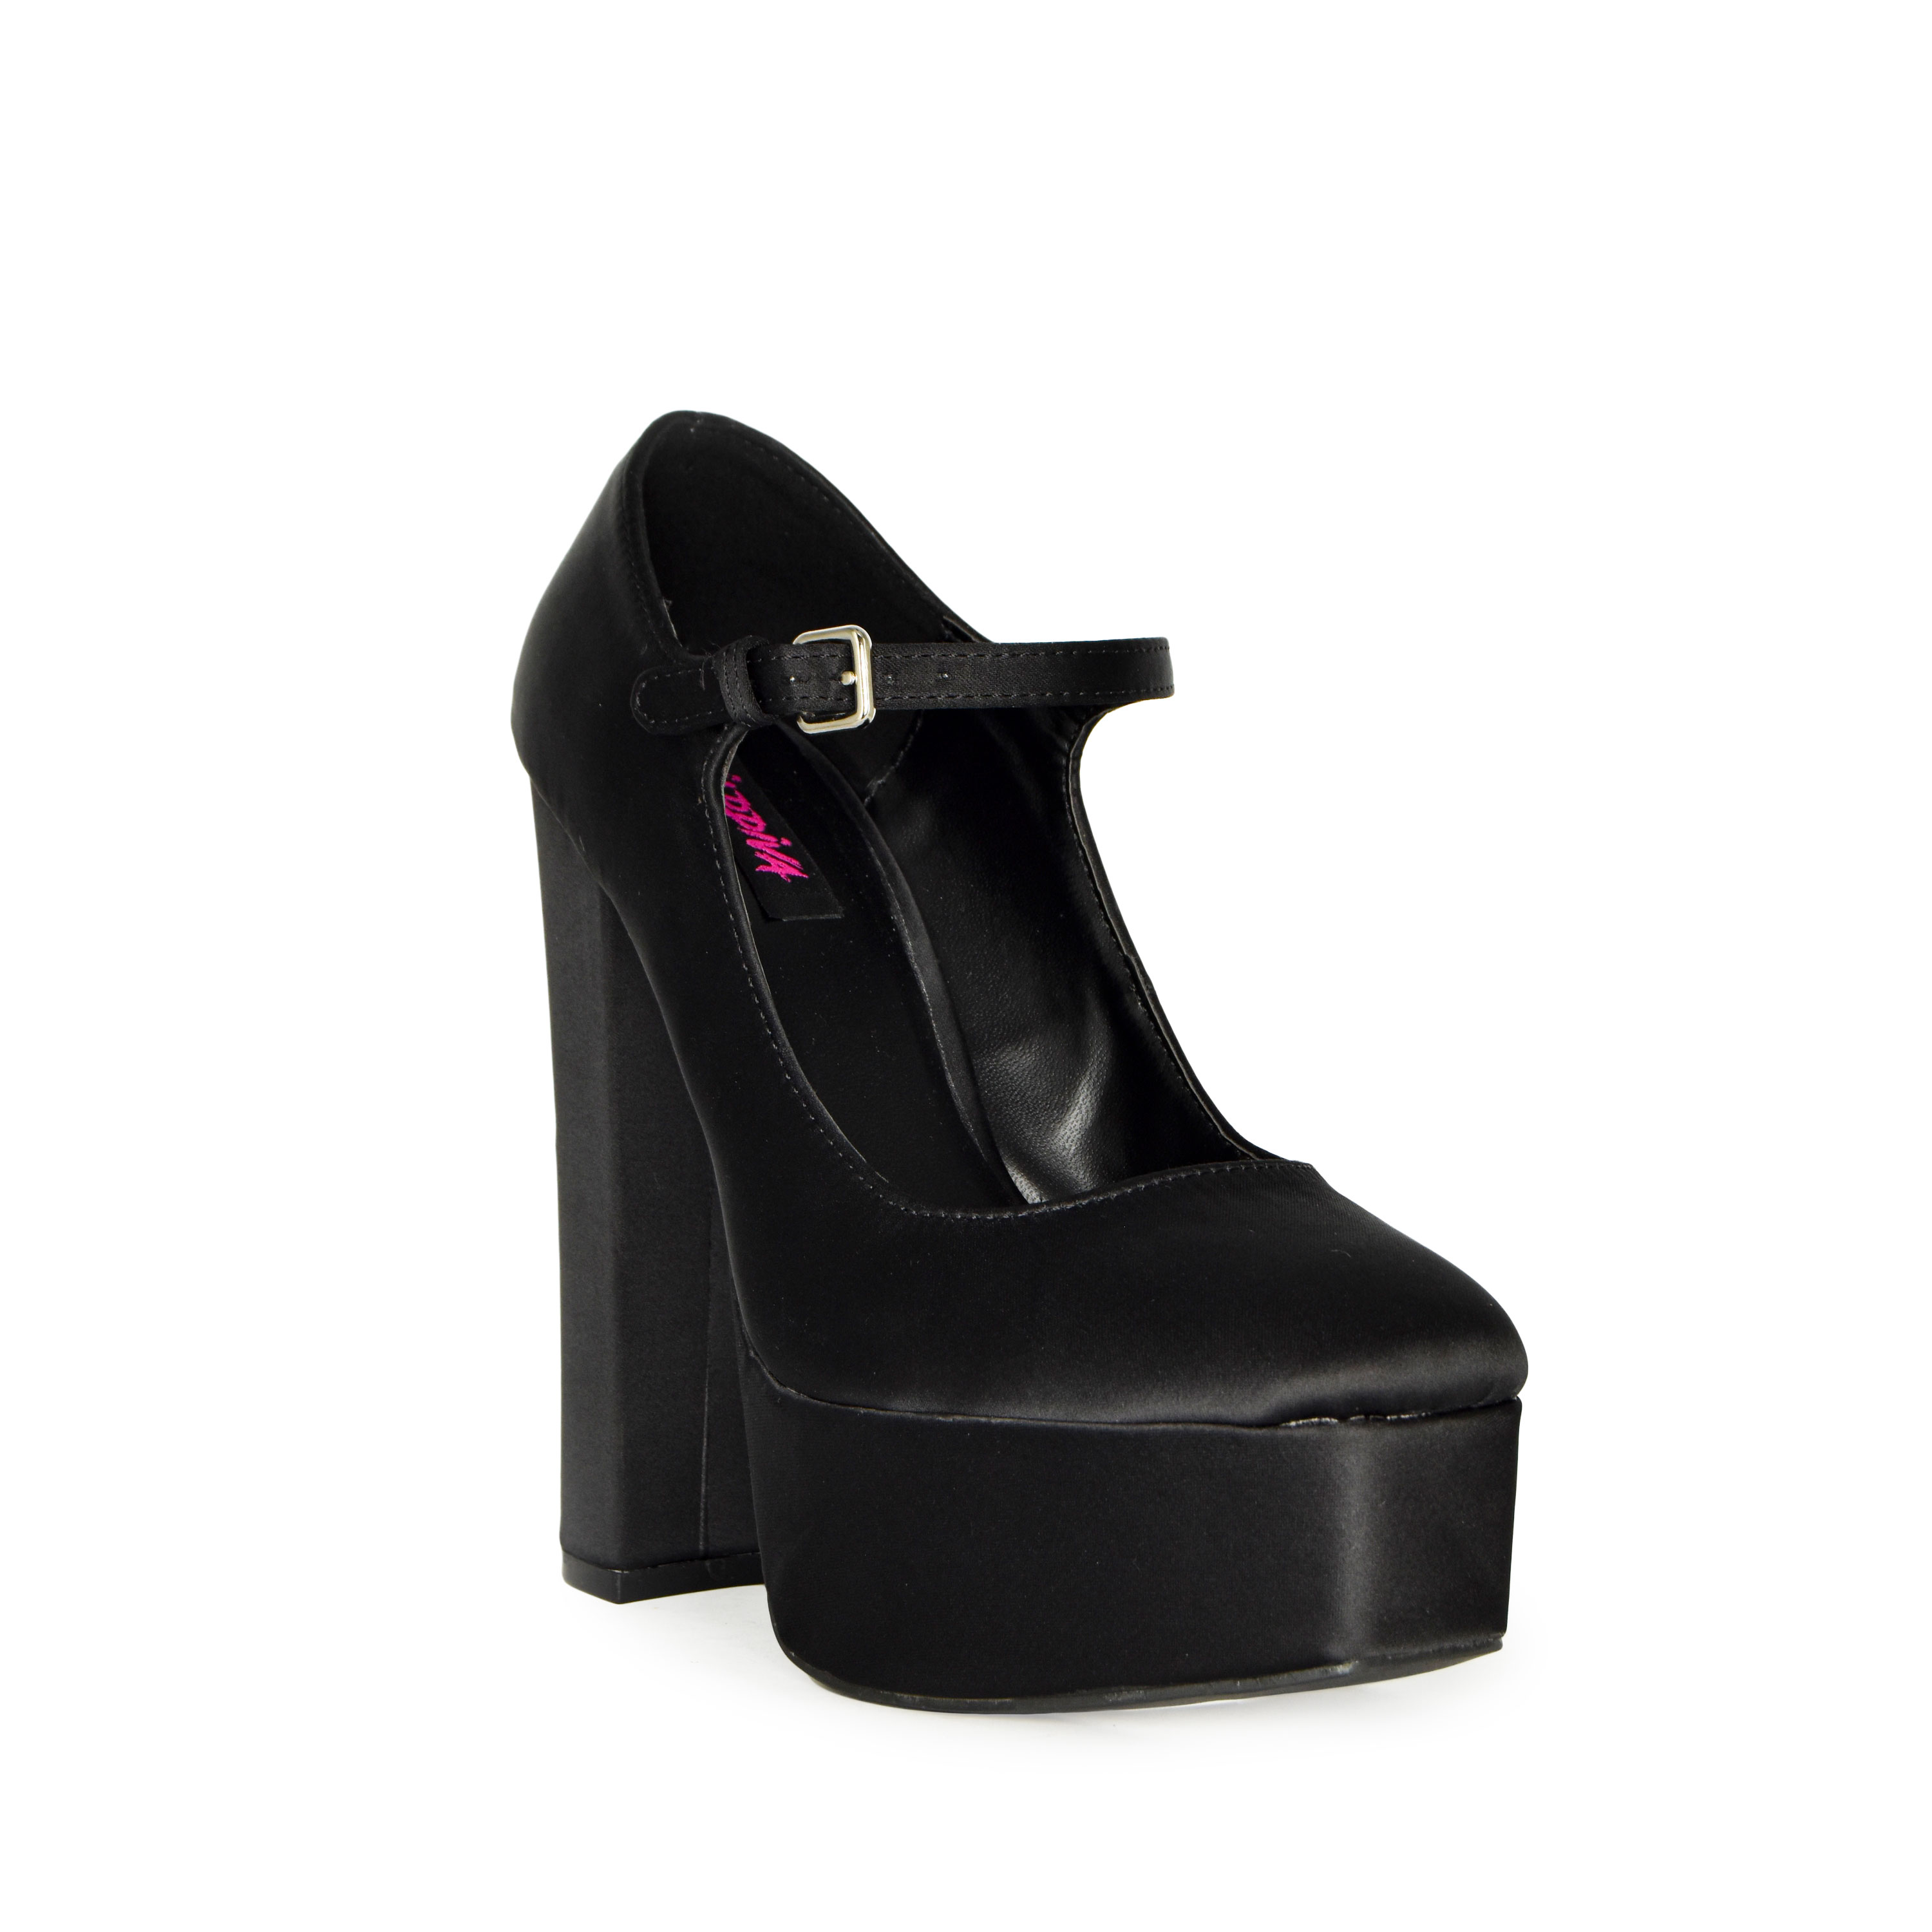 Wild Diva Satin Round Toe Platform Mary Jane Heels (Black, 7) - image 2 of 5